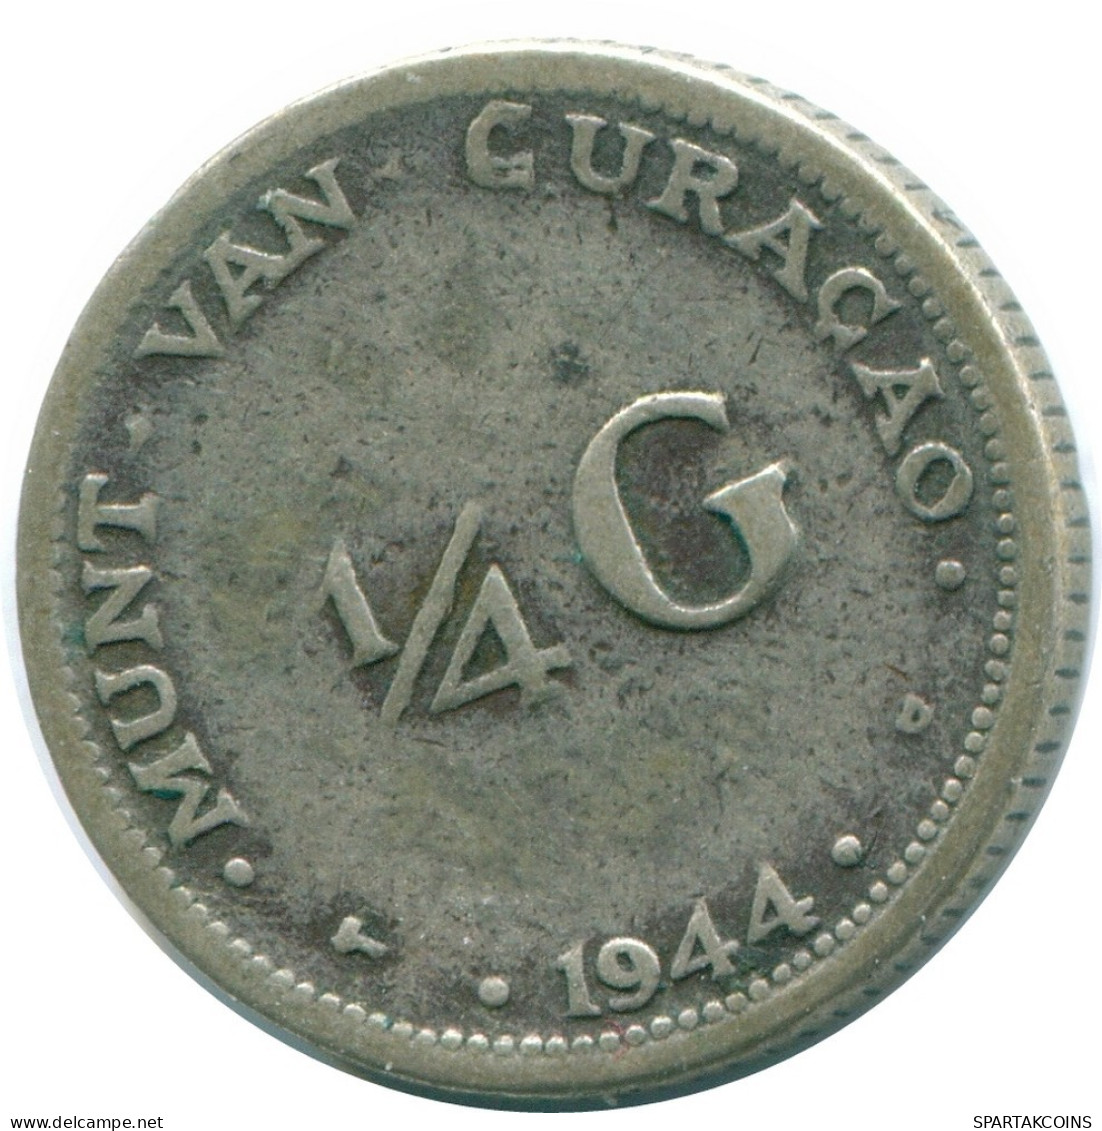 1/4 GULDEN 1944 CURACAO Netherlands SILVER Colonial Coin #NL10649.4.U.A - Curacao